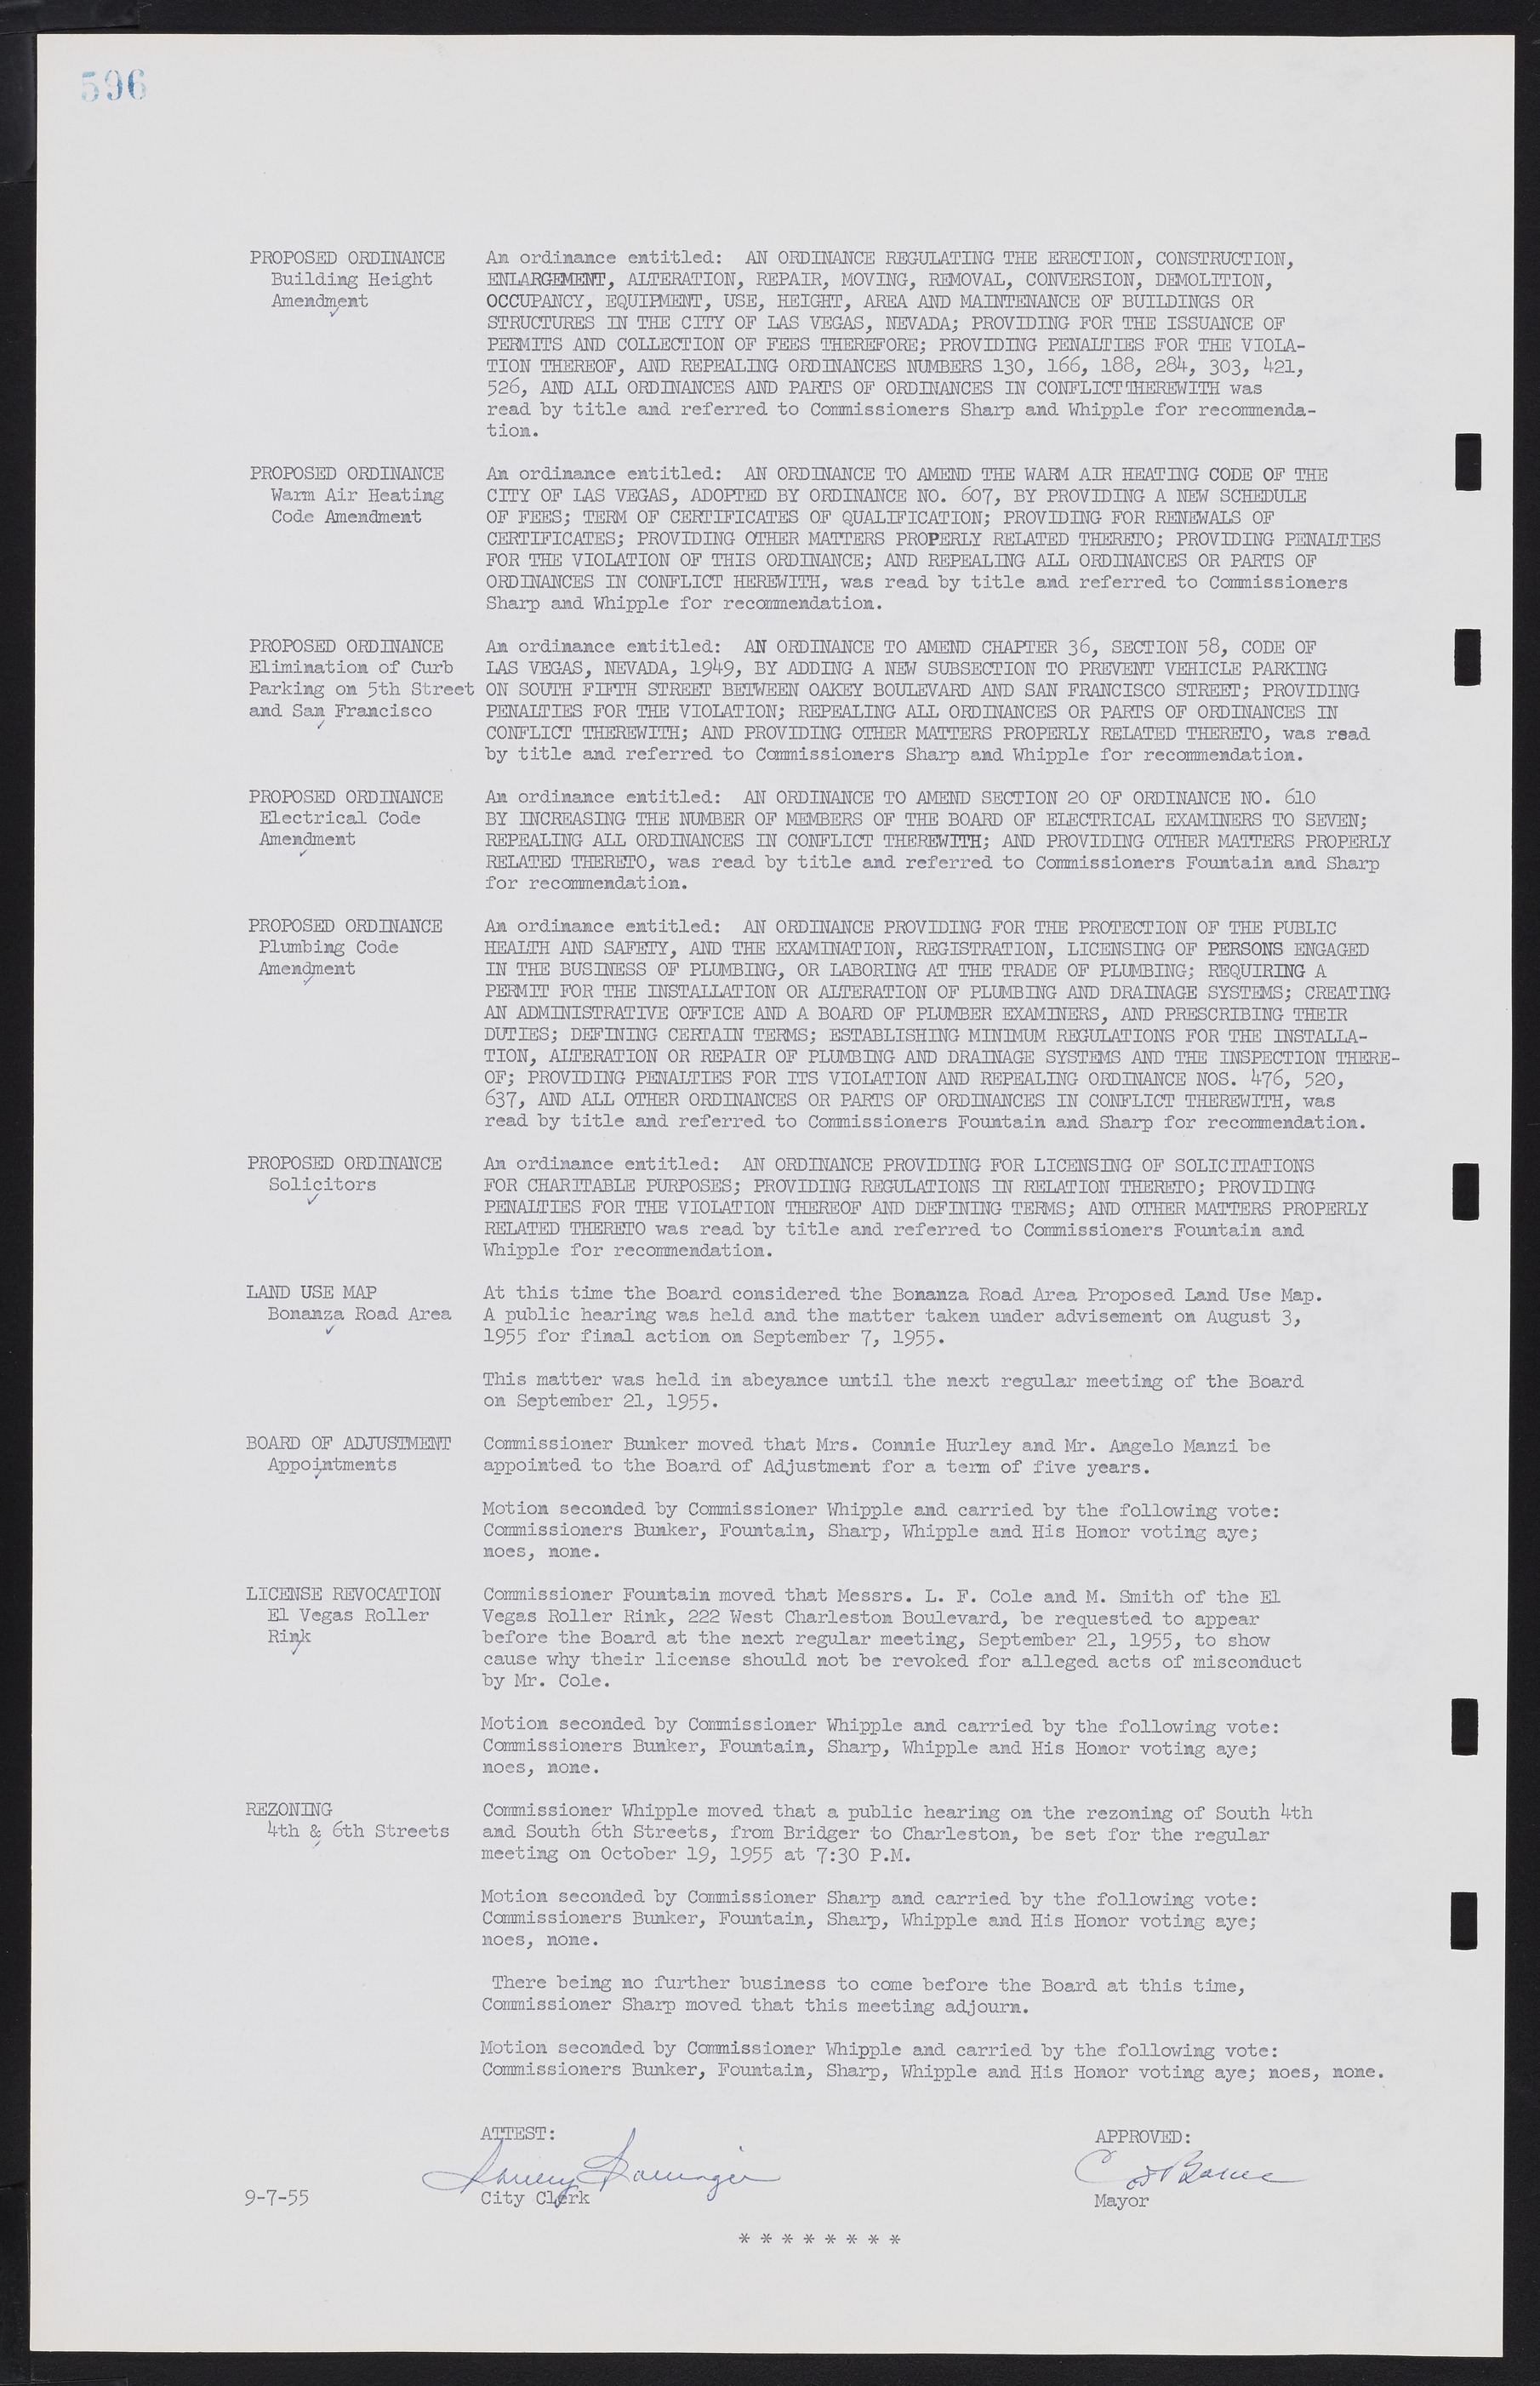 Las Vegas City Commission Minutes, February 17, 1954 to September 21, 1955, lvc000009-602